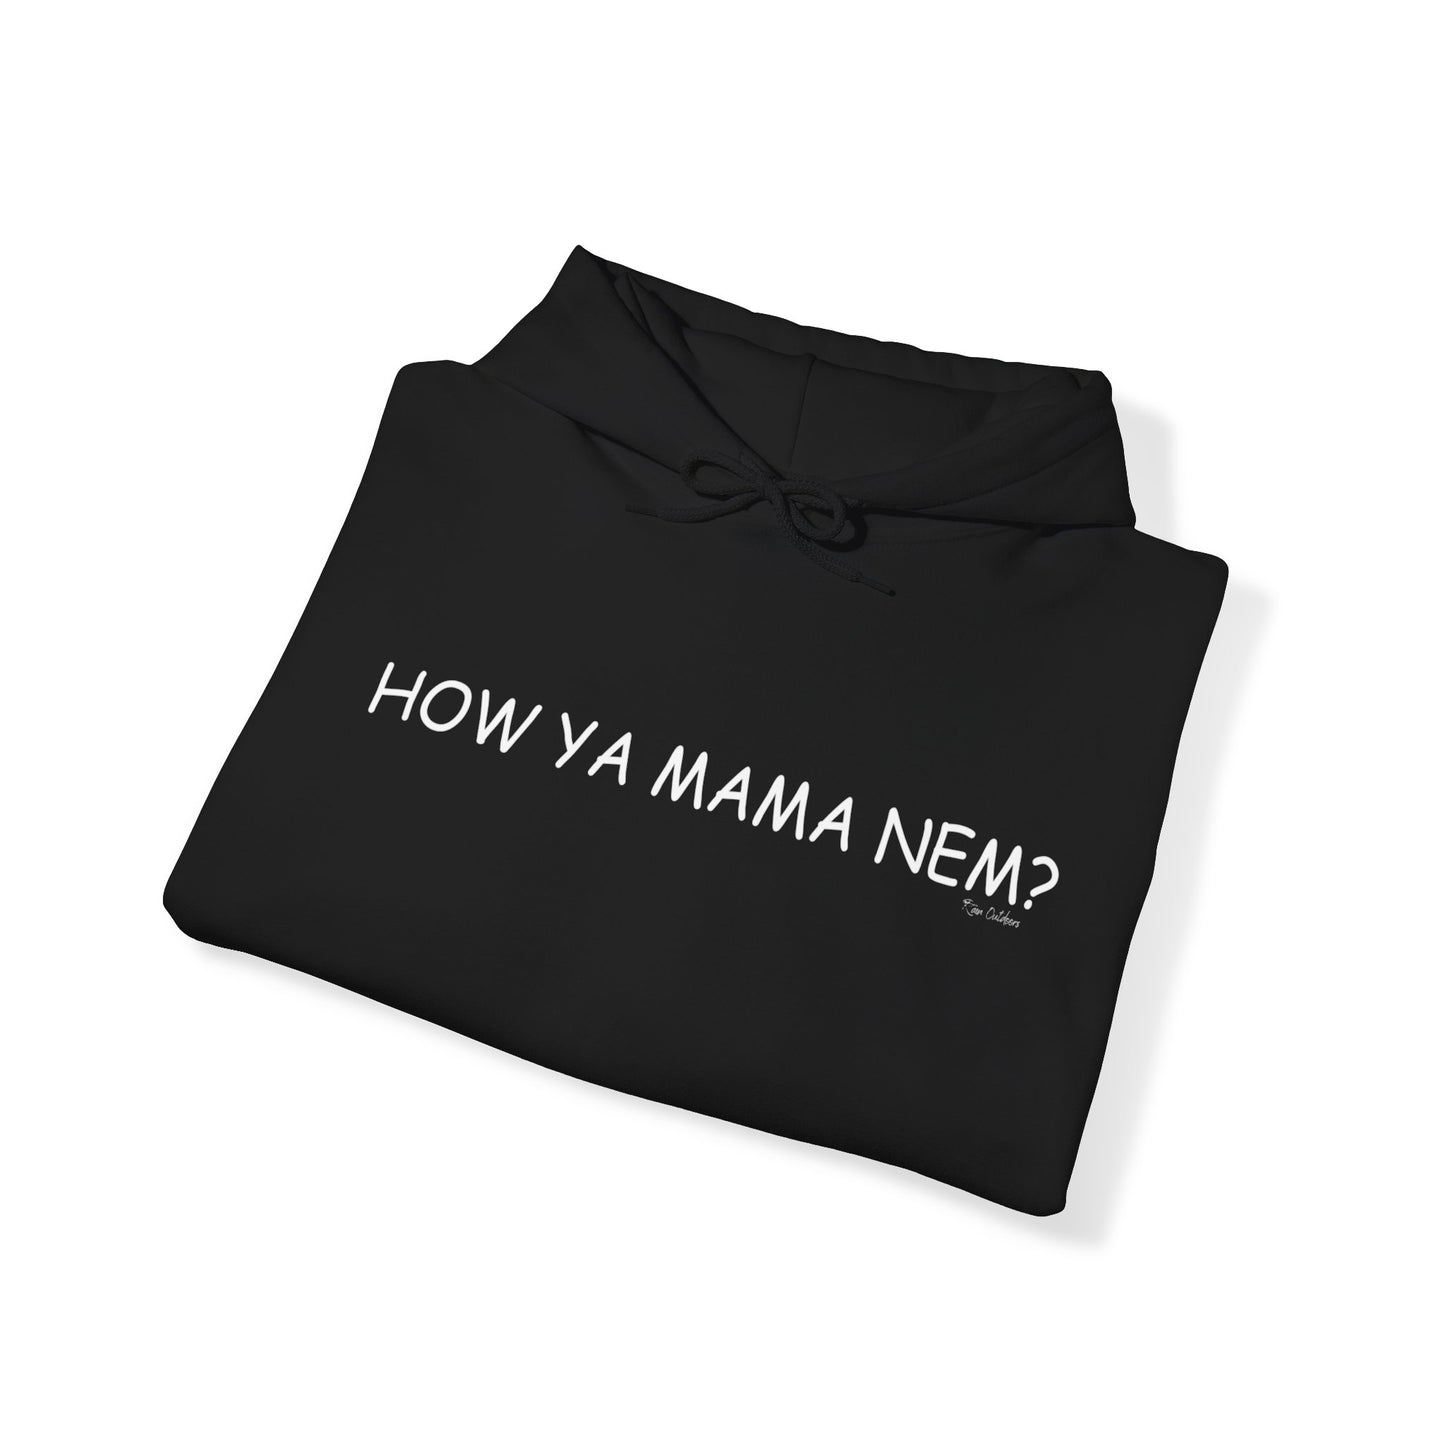 How ya mama nem? Unisex Heavy Blend™ Hooded Sweatshirt